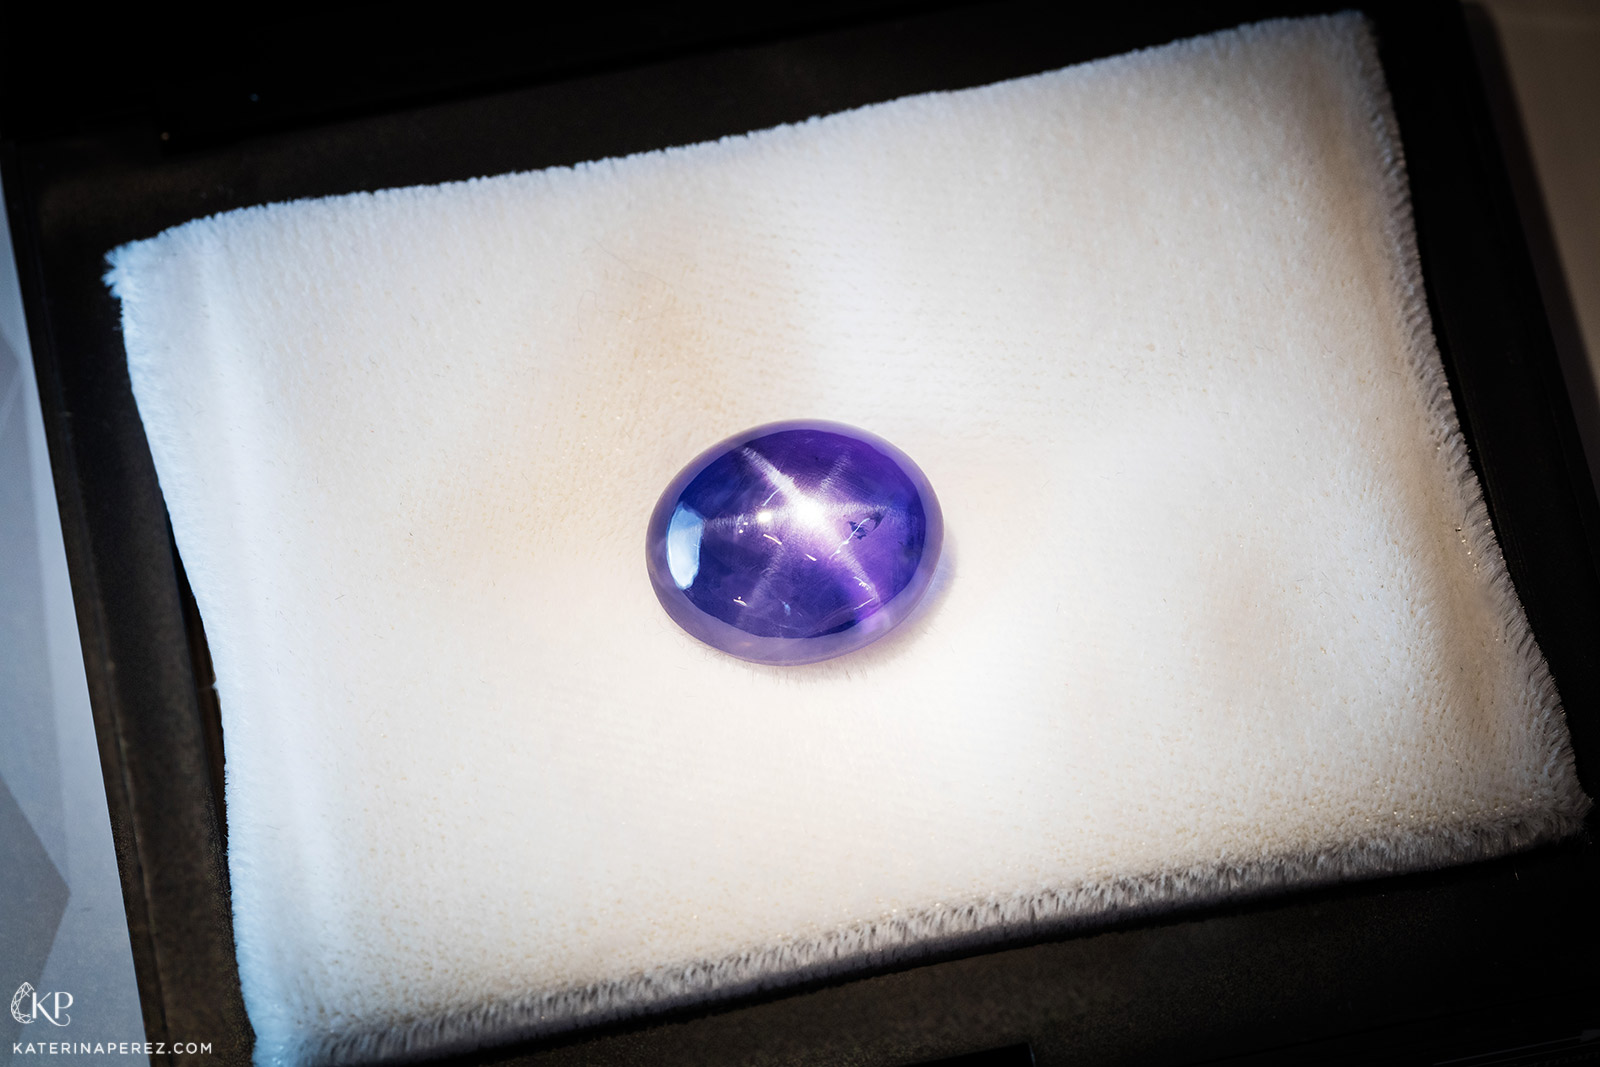 Constantin Wild cabochon cut 29 carat fancy purple star sapphire. Photo by Simon Martner